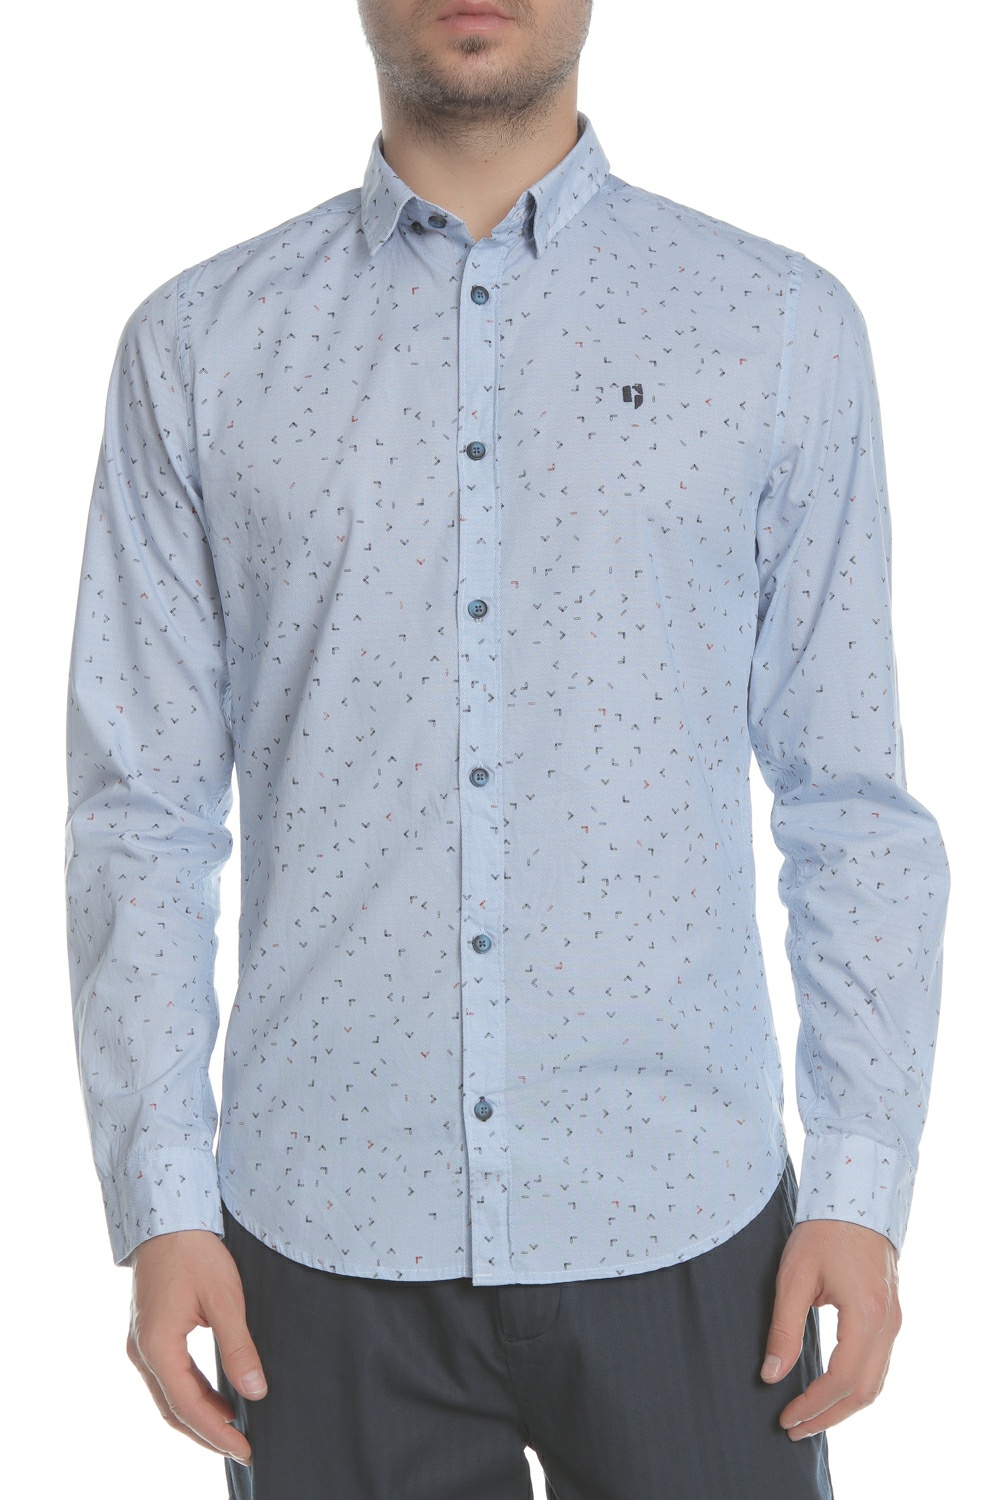 GARCIA JEANS - Ανδρικό πουκάμισο GARCIA JEANS γαλάζια Ανδρικά/Ρούχα/Πουκάμισα/Μακρυμάνικα